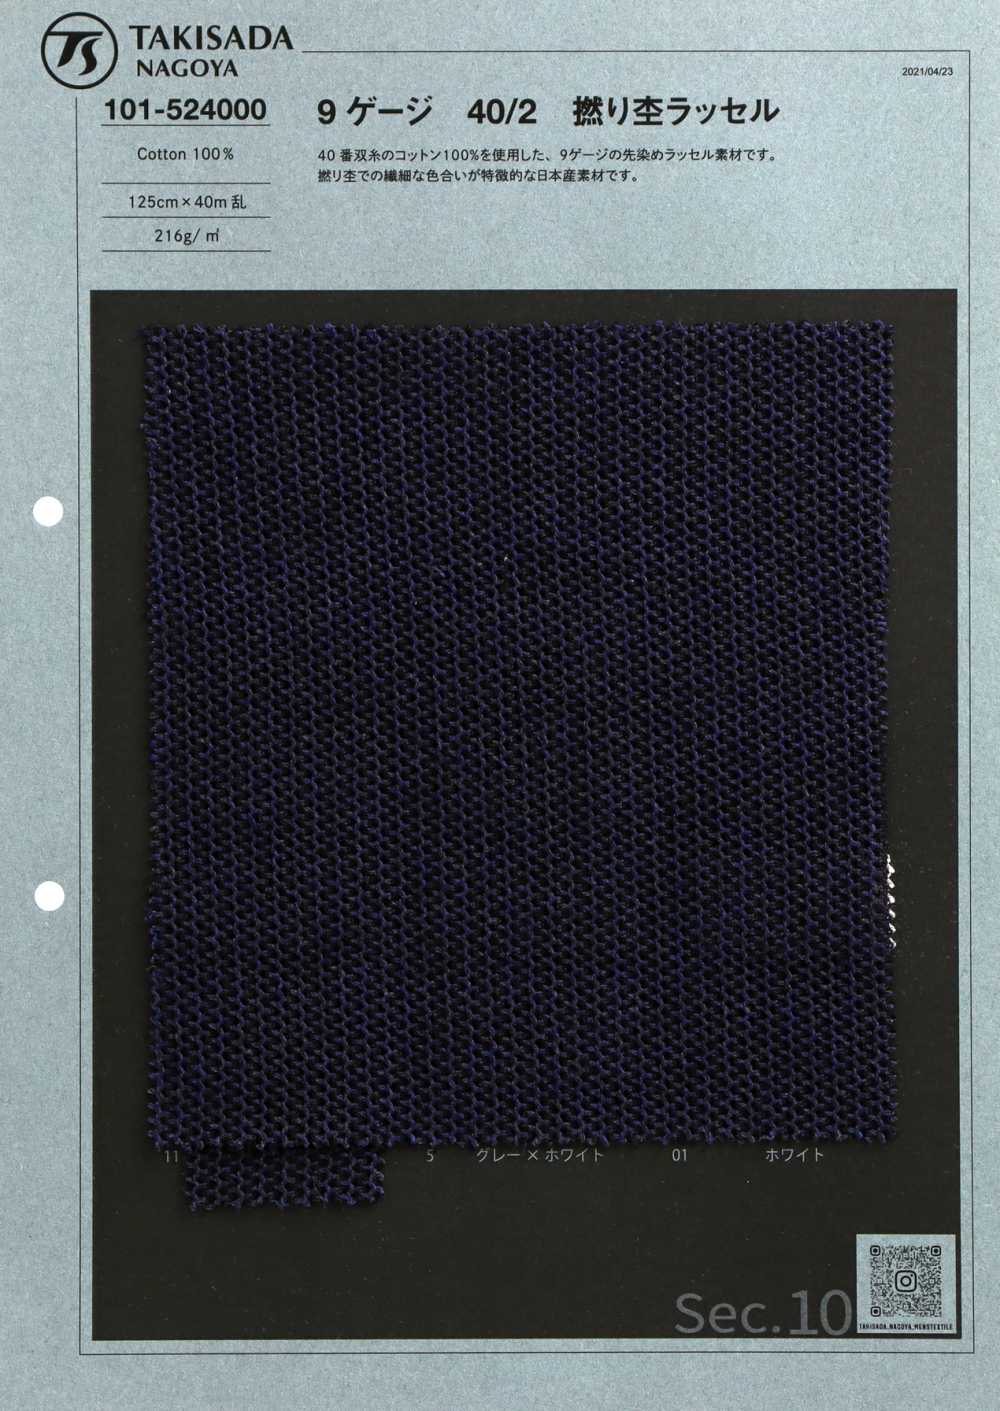 101-524000 9G 40/2 Twisted Heather Raschel[Fabrication De Textile] Takisada Nagoya